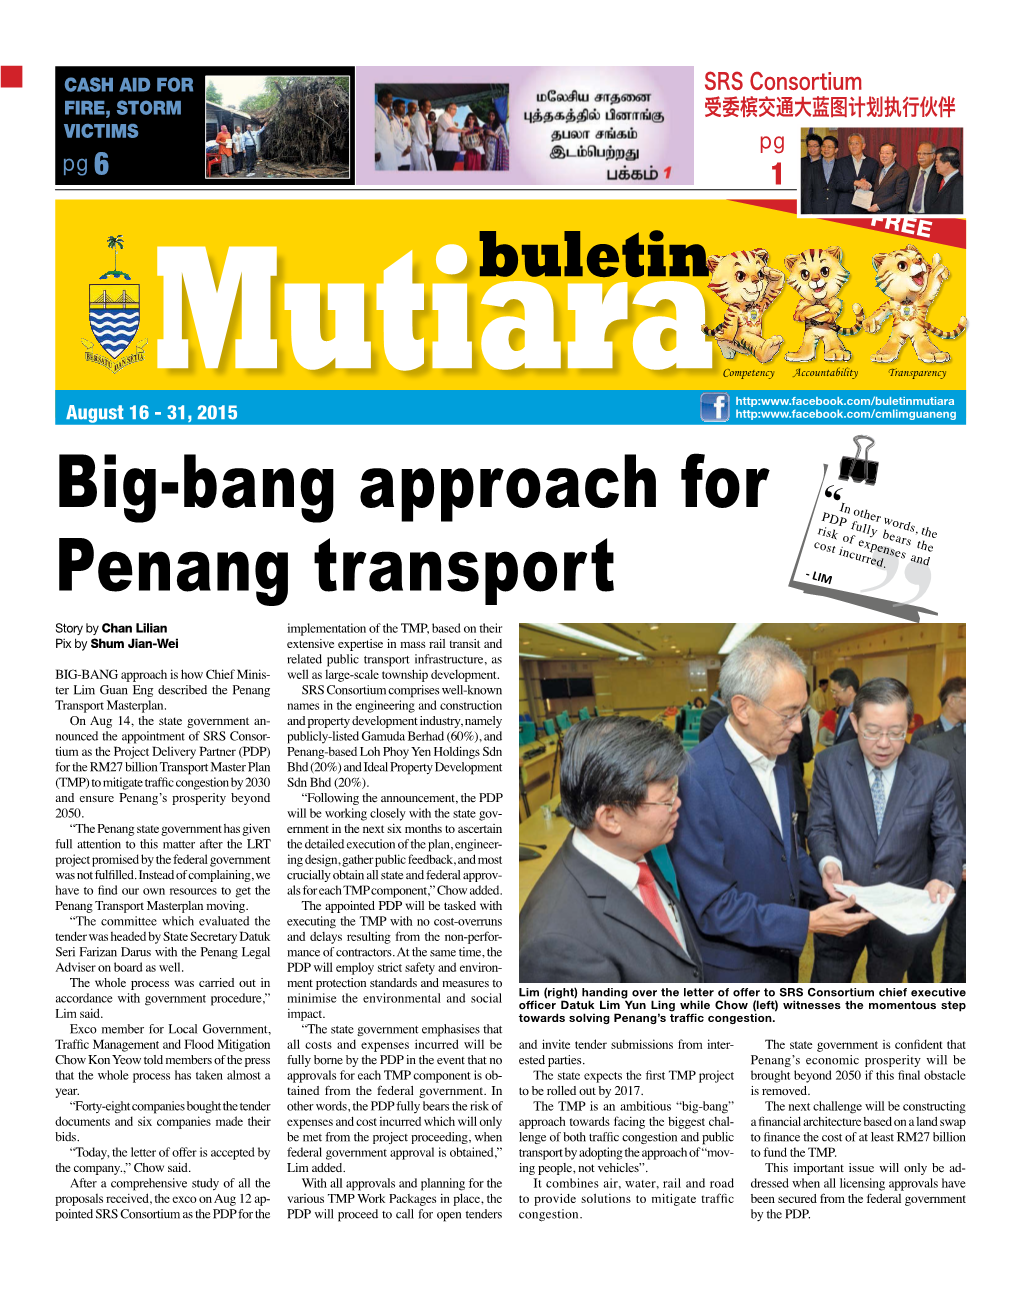 Big-Bang Approach for Penang Transport